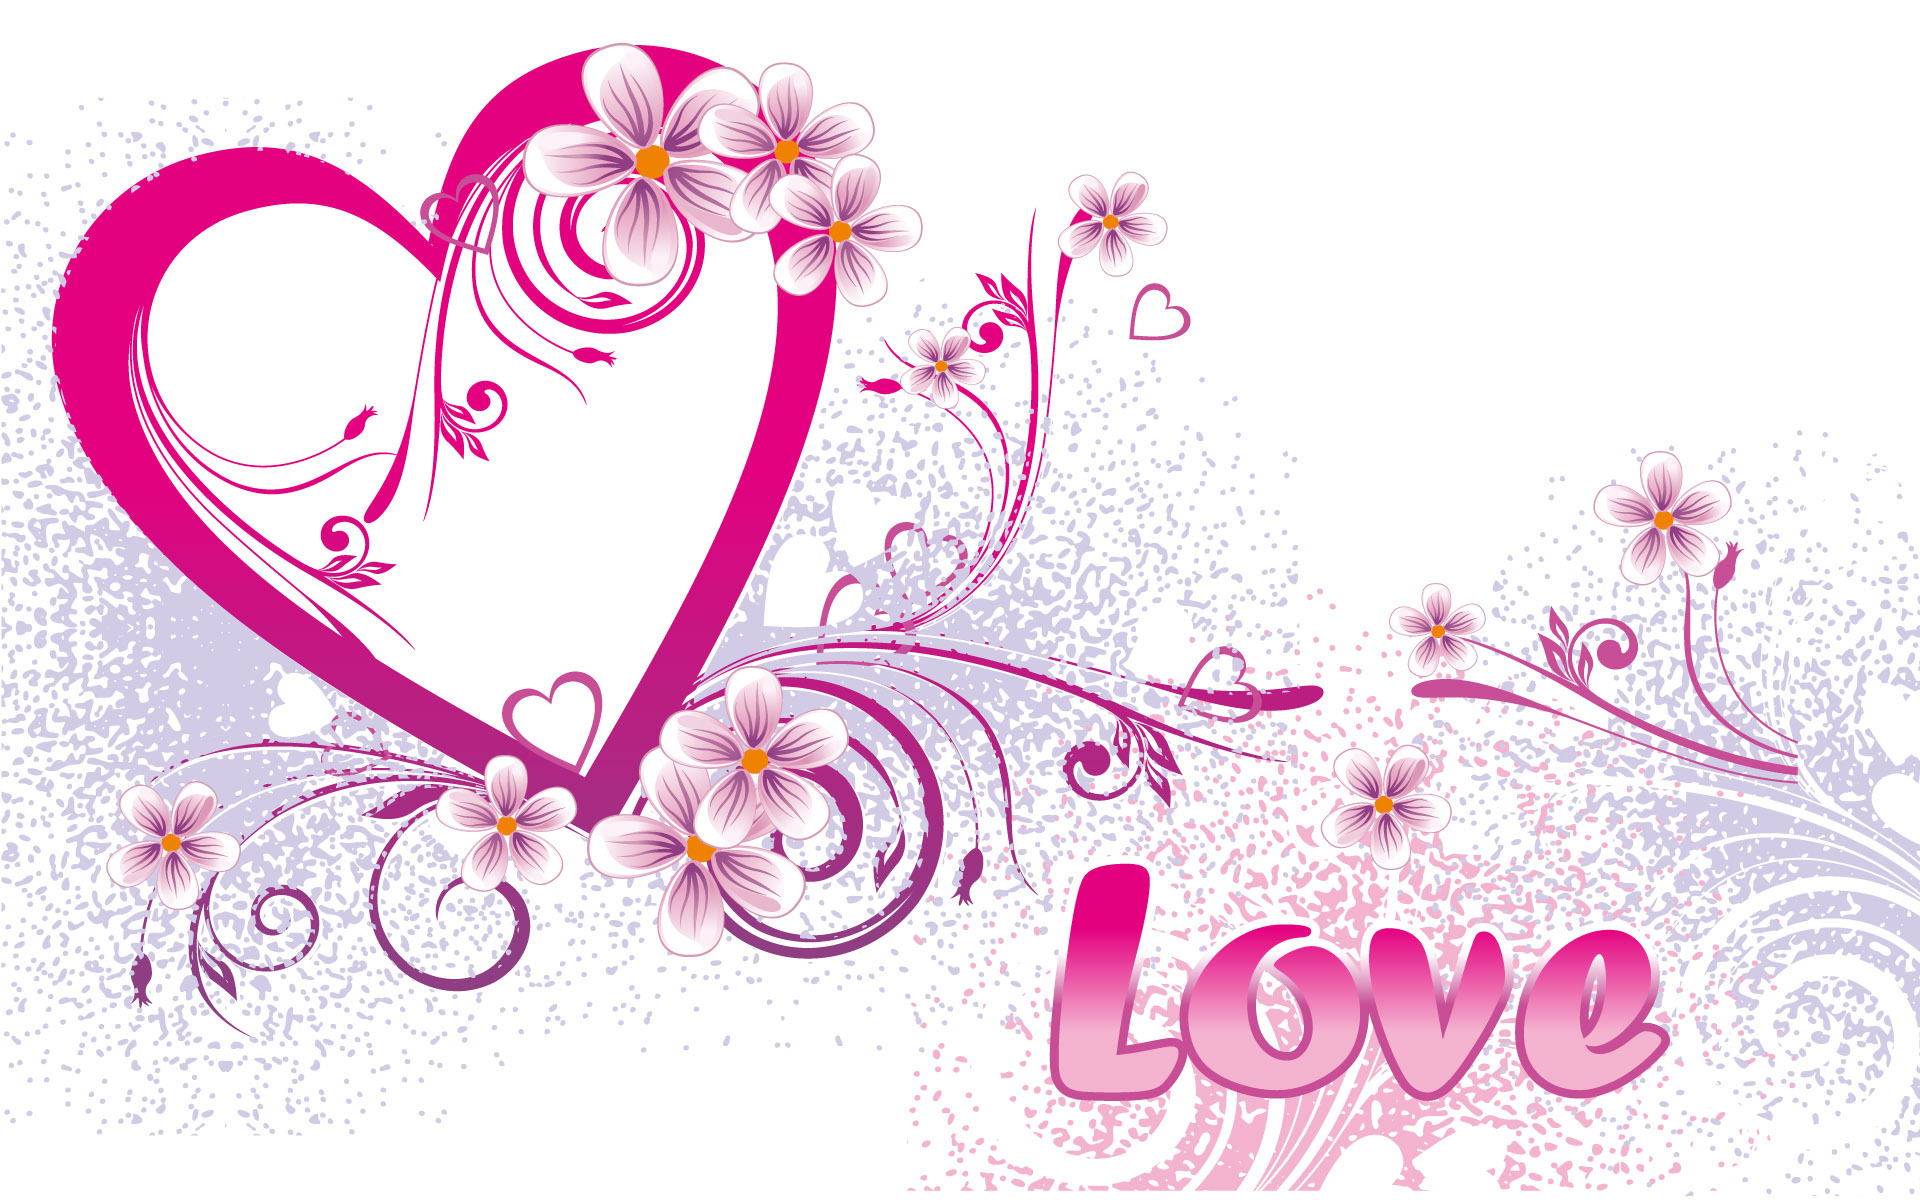 Sweet & Cute Love Wallpaper HD Wallpapers Download